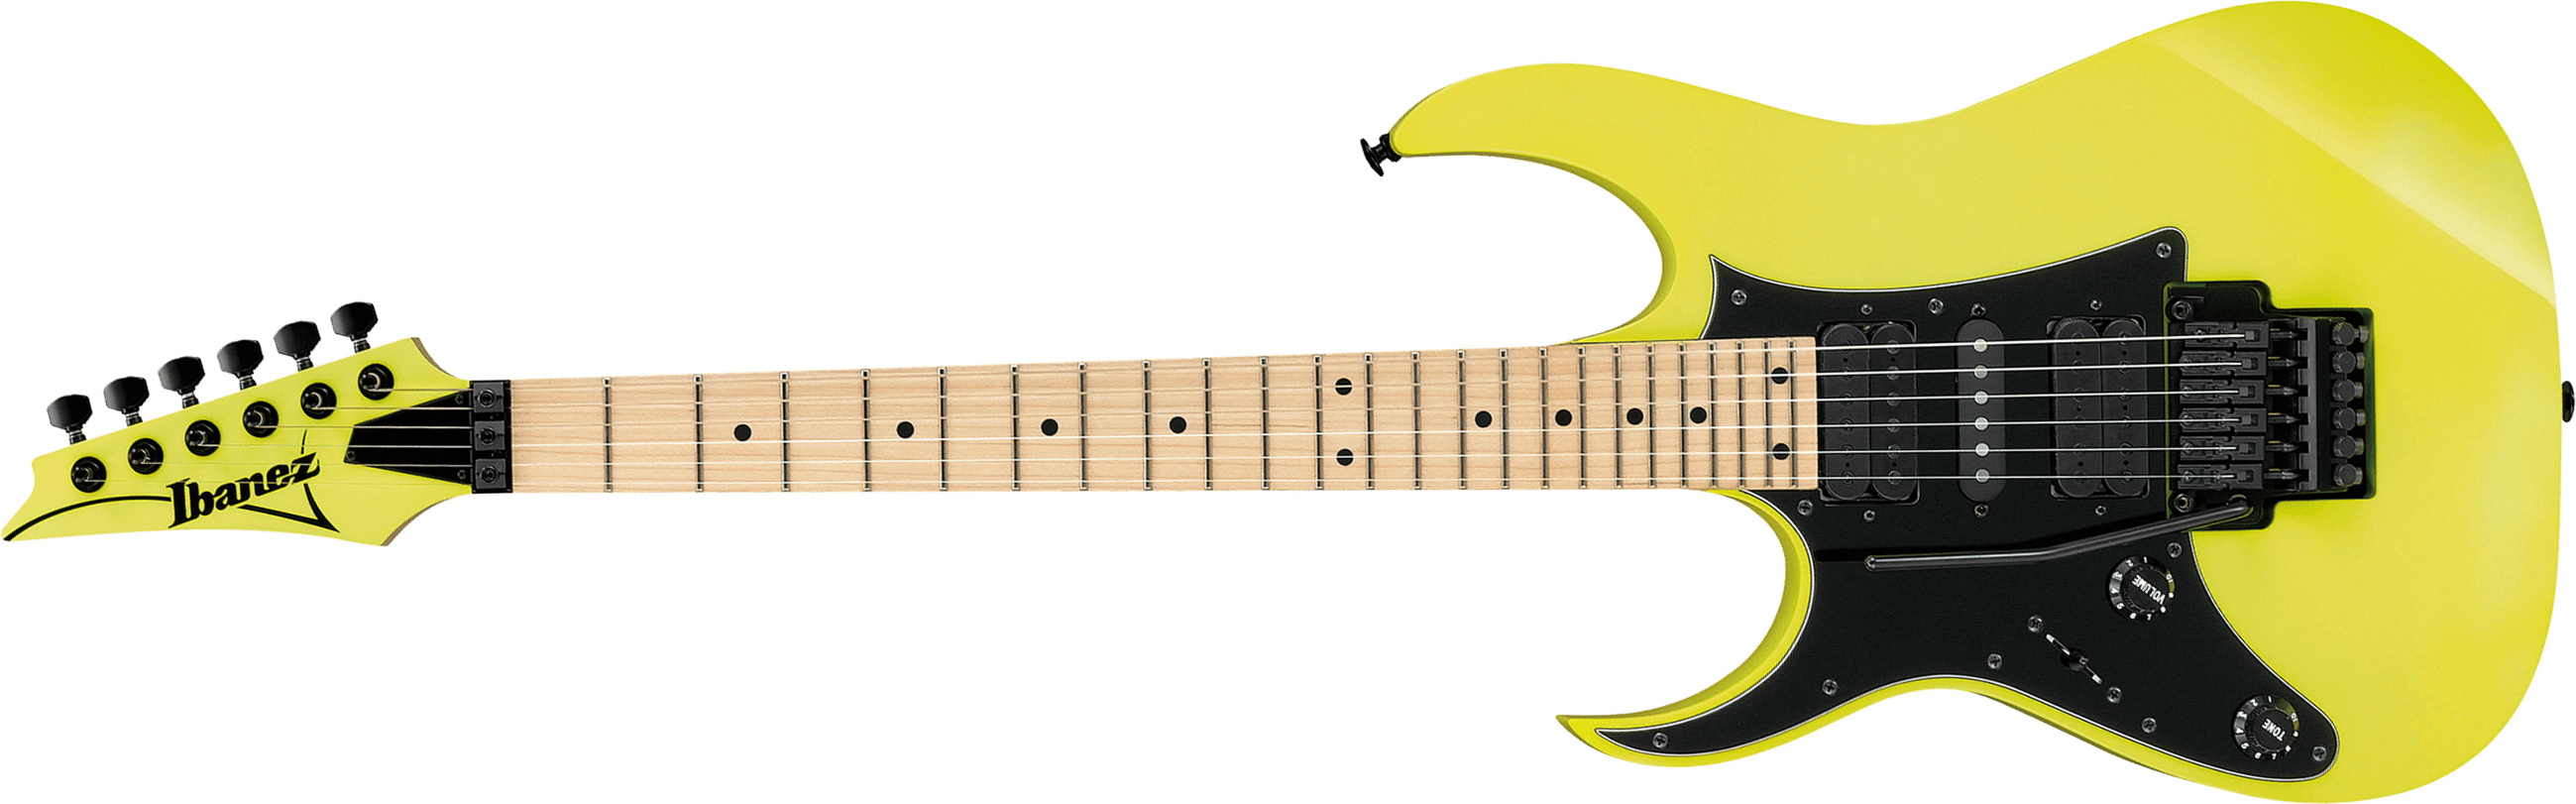 Ibanez Rg550l Dy Genesis Jap Lh Gaucher Hsh Fr Mn - Desert Sun Yellow - Linkshandige elektrische gitaar - Main picture